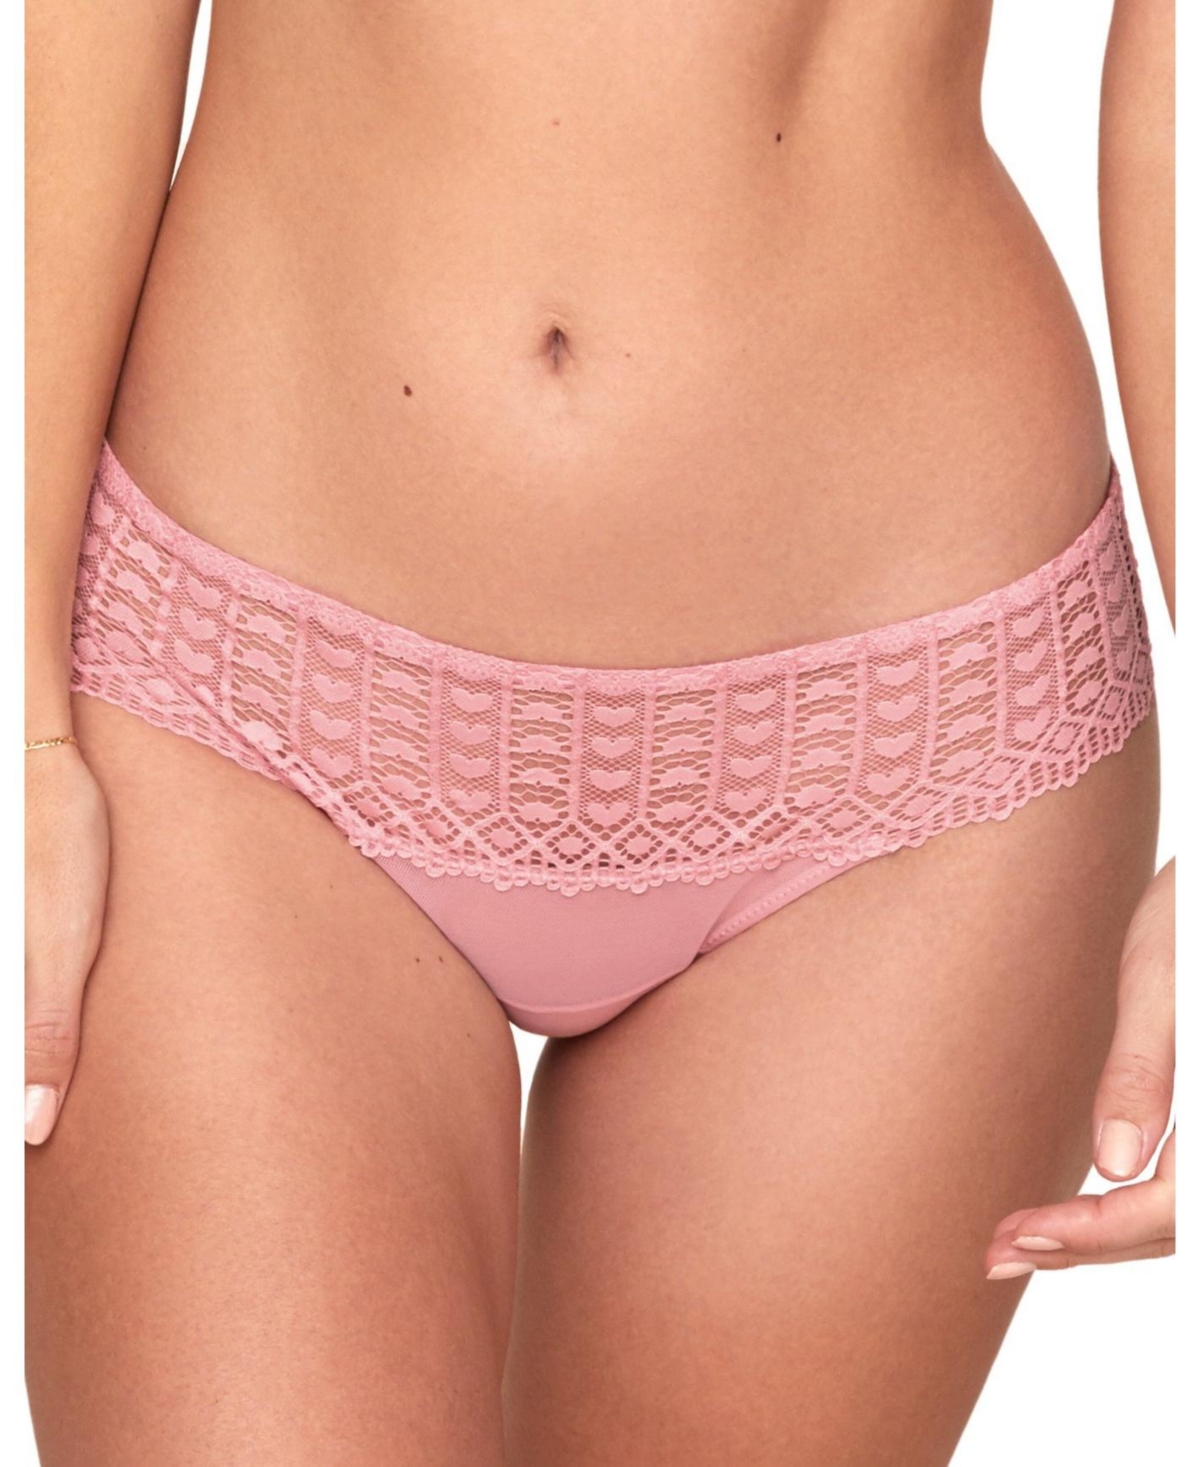 Women's Nymphadora Cheeky Panty - Medium pink